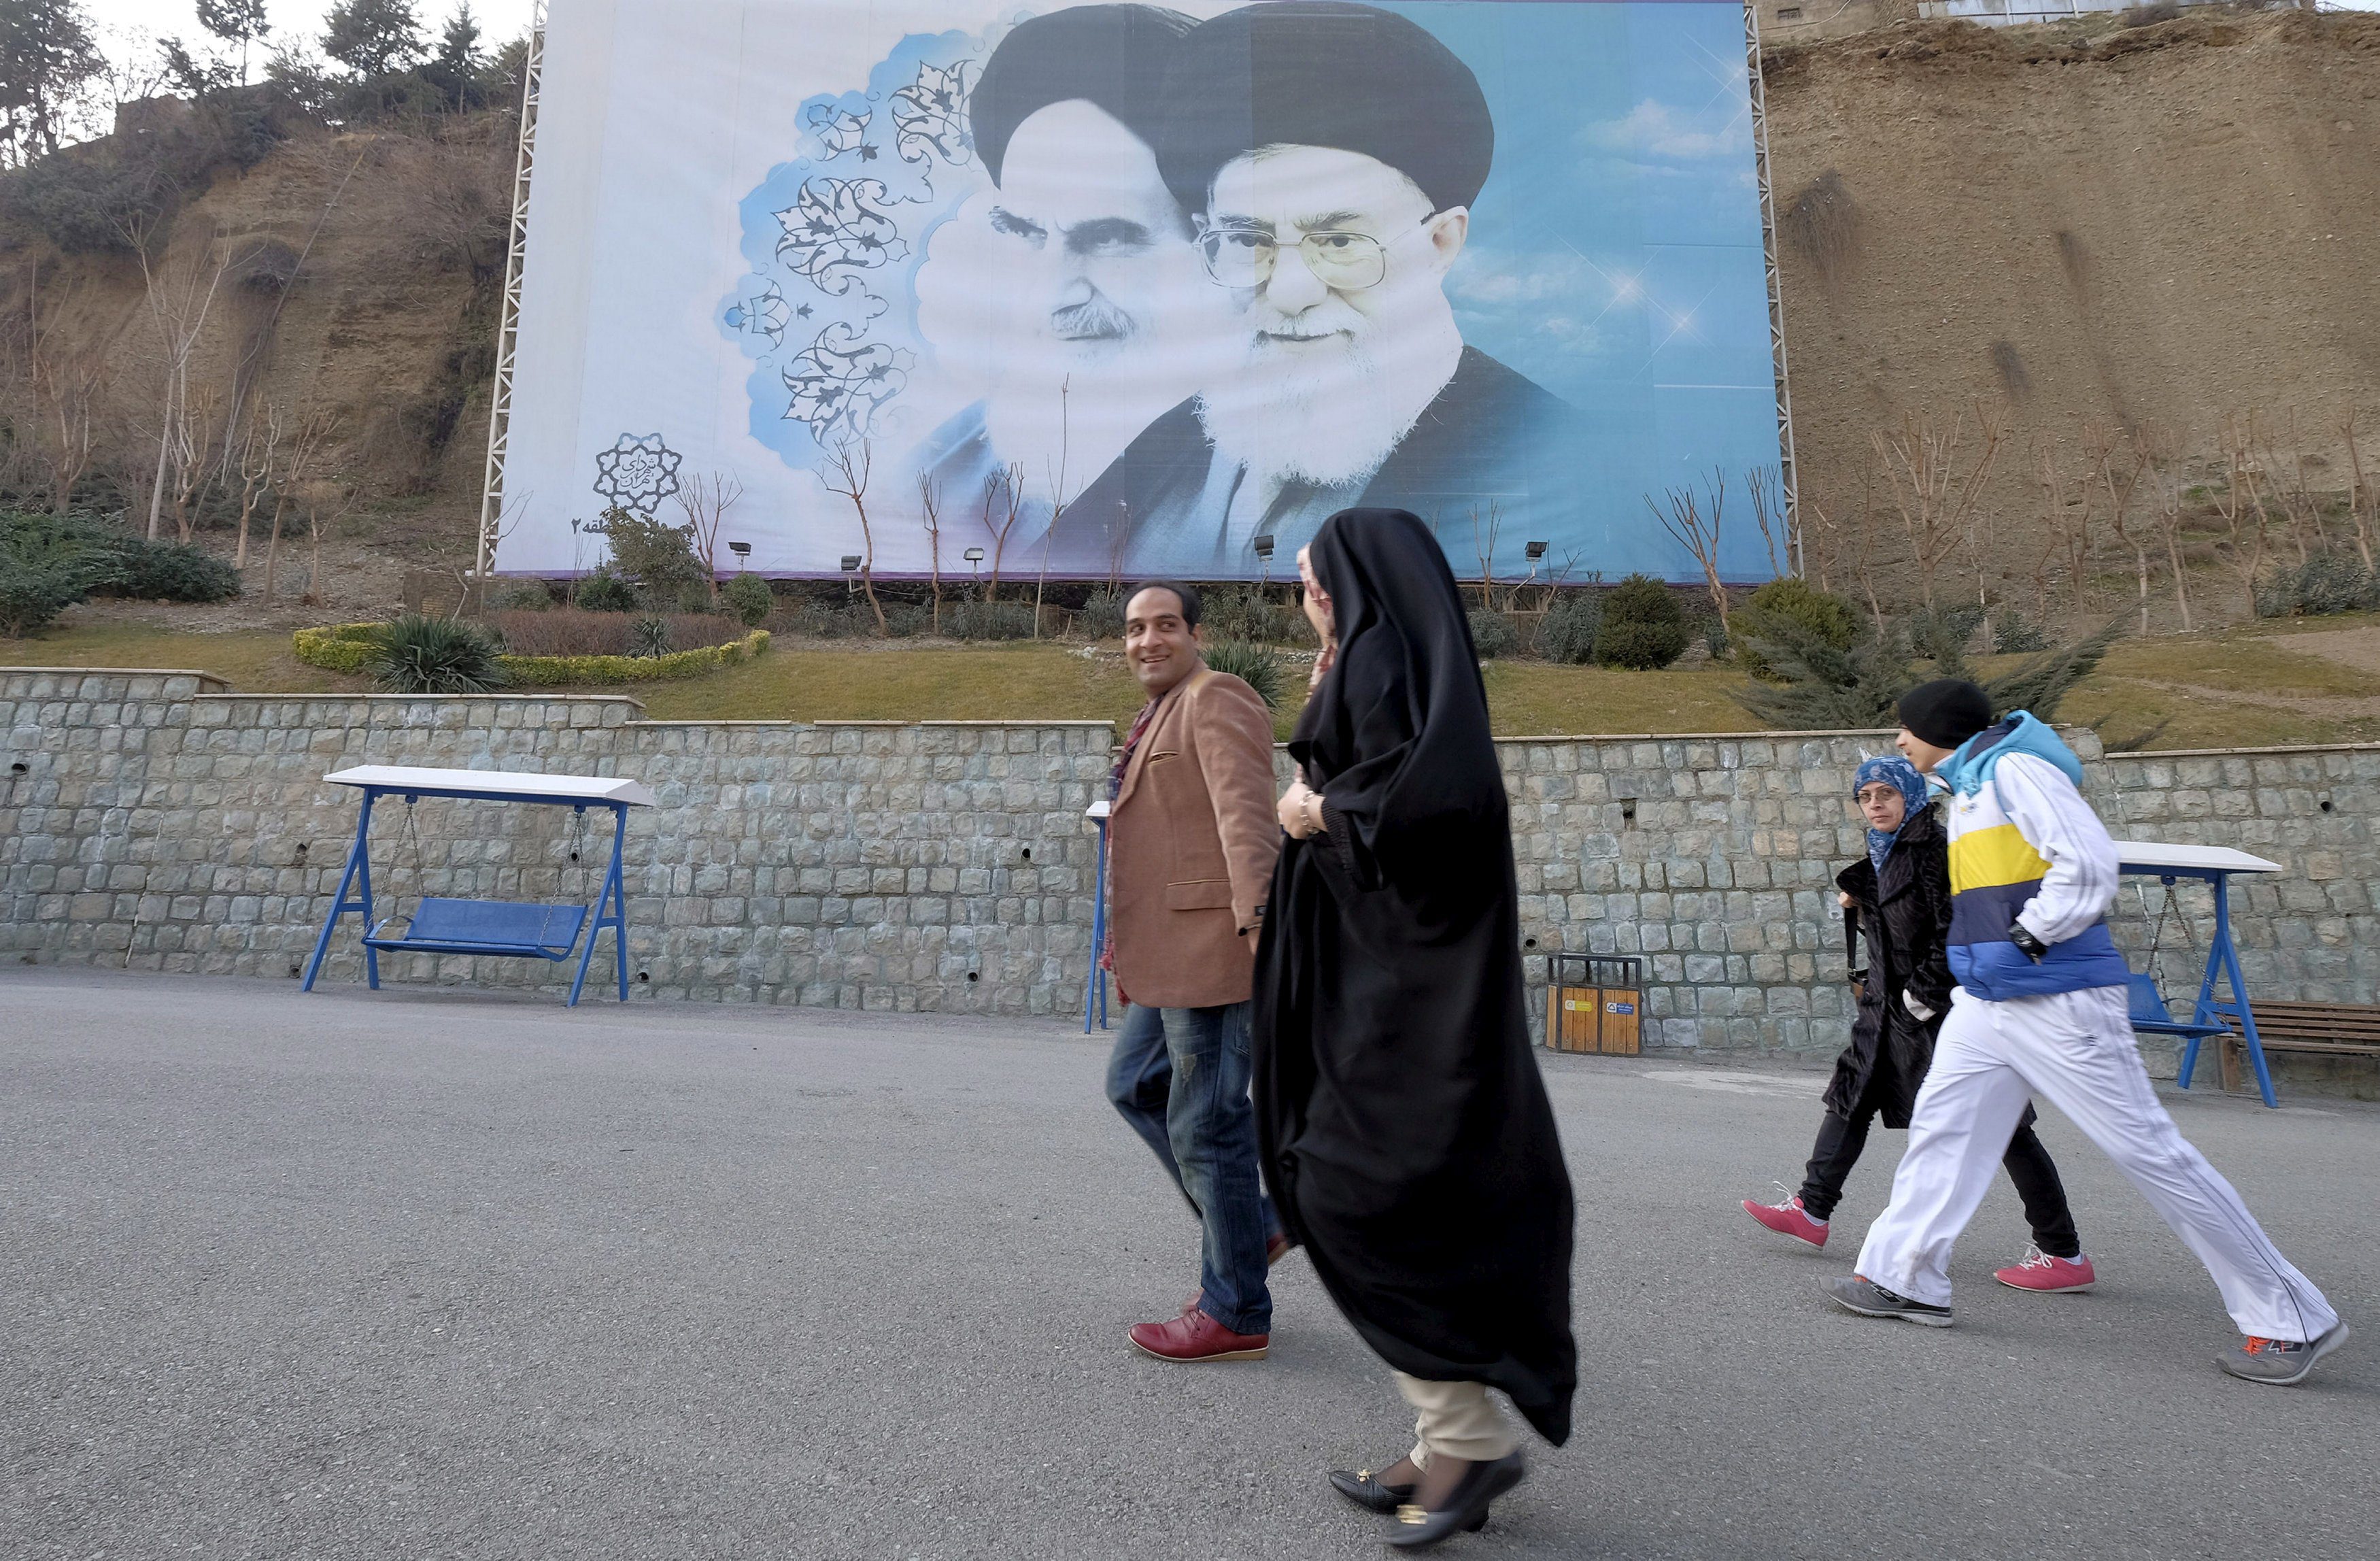 FILE PHOTO: Iranians walk past a large picture of Iran’s late leader Ayatollah Ruhollah Khomeini and Iran’s Supreme Leader Ayatollah Ali Khamenei at a park in Tehran